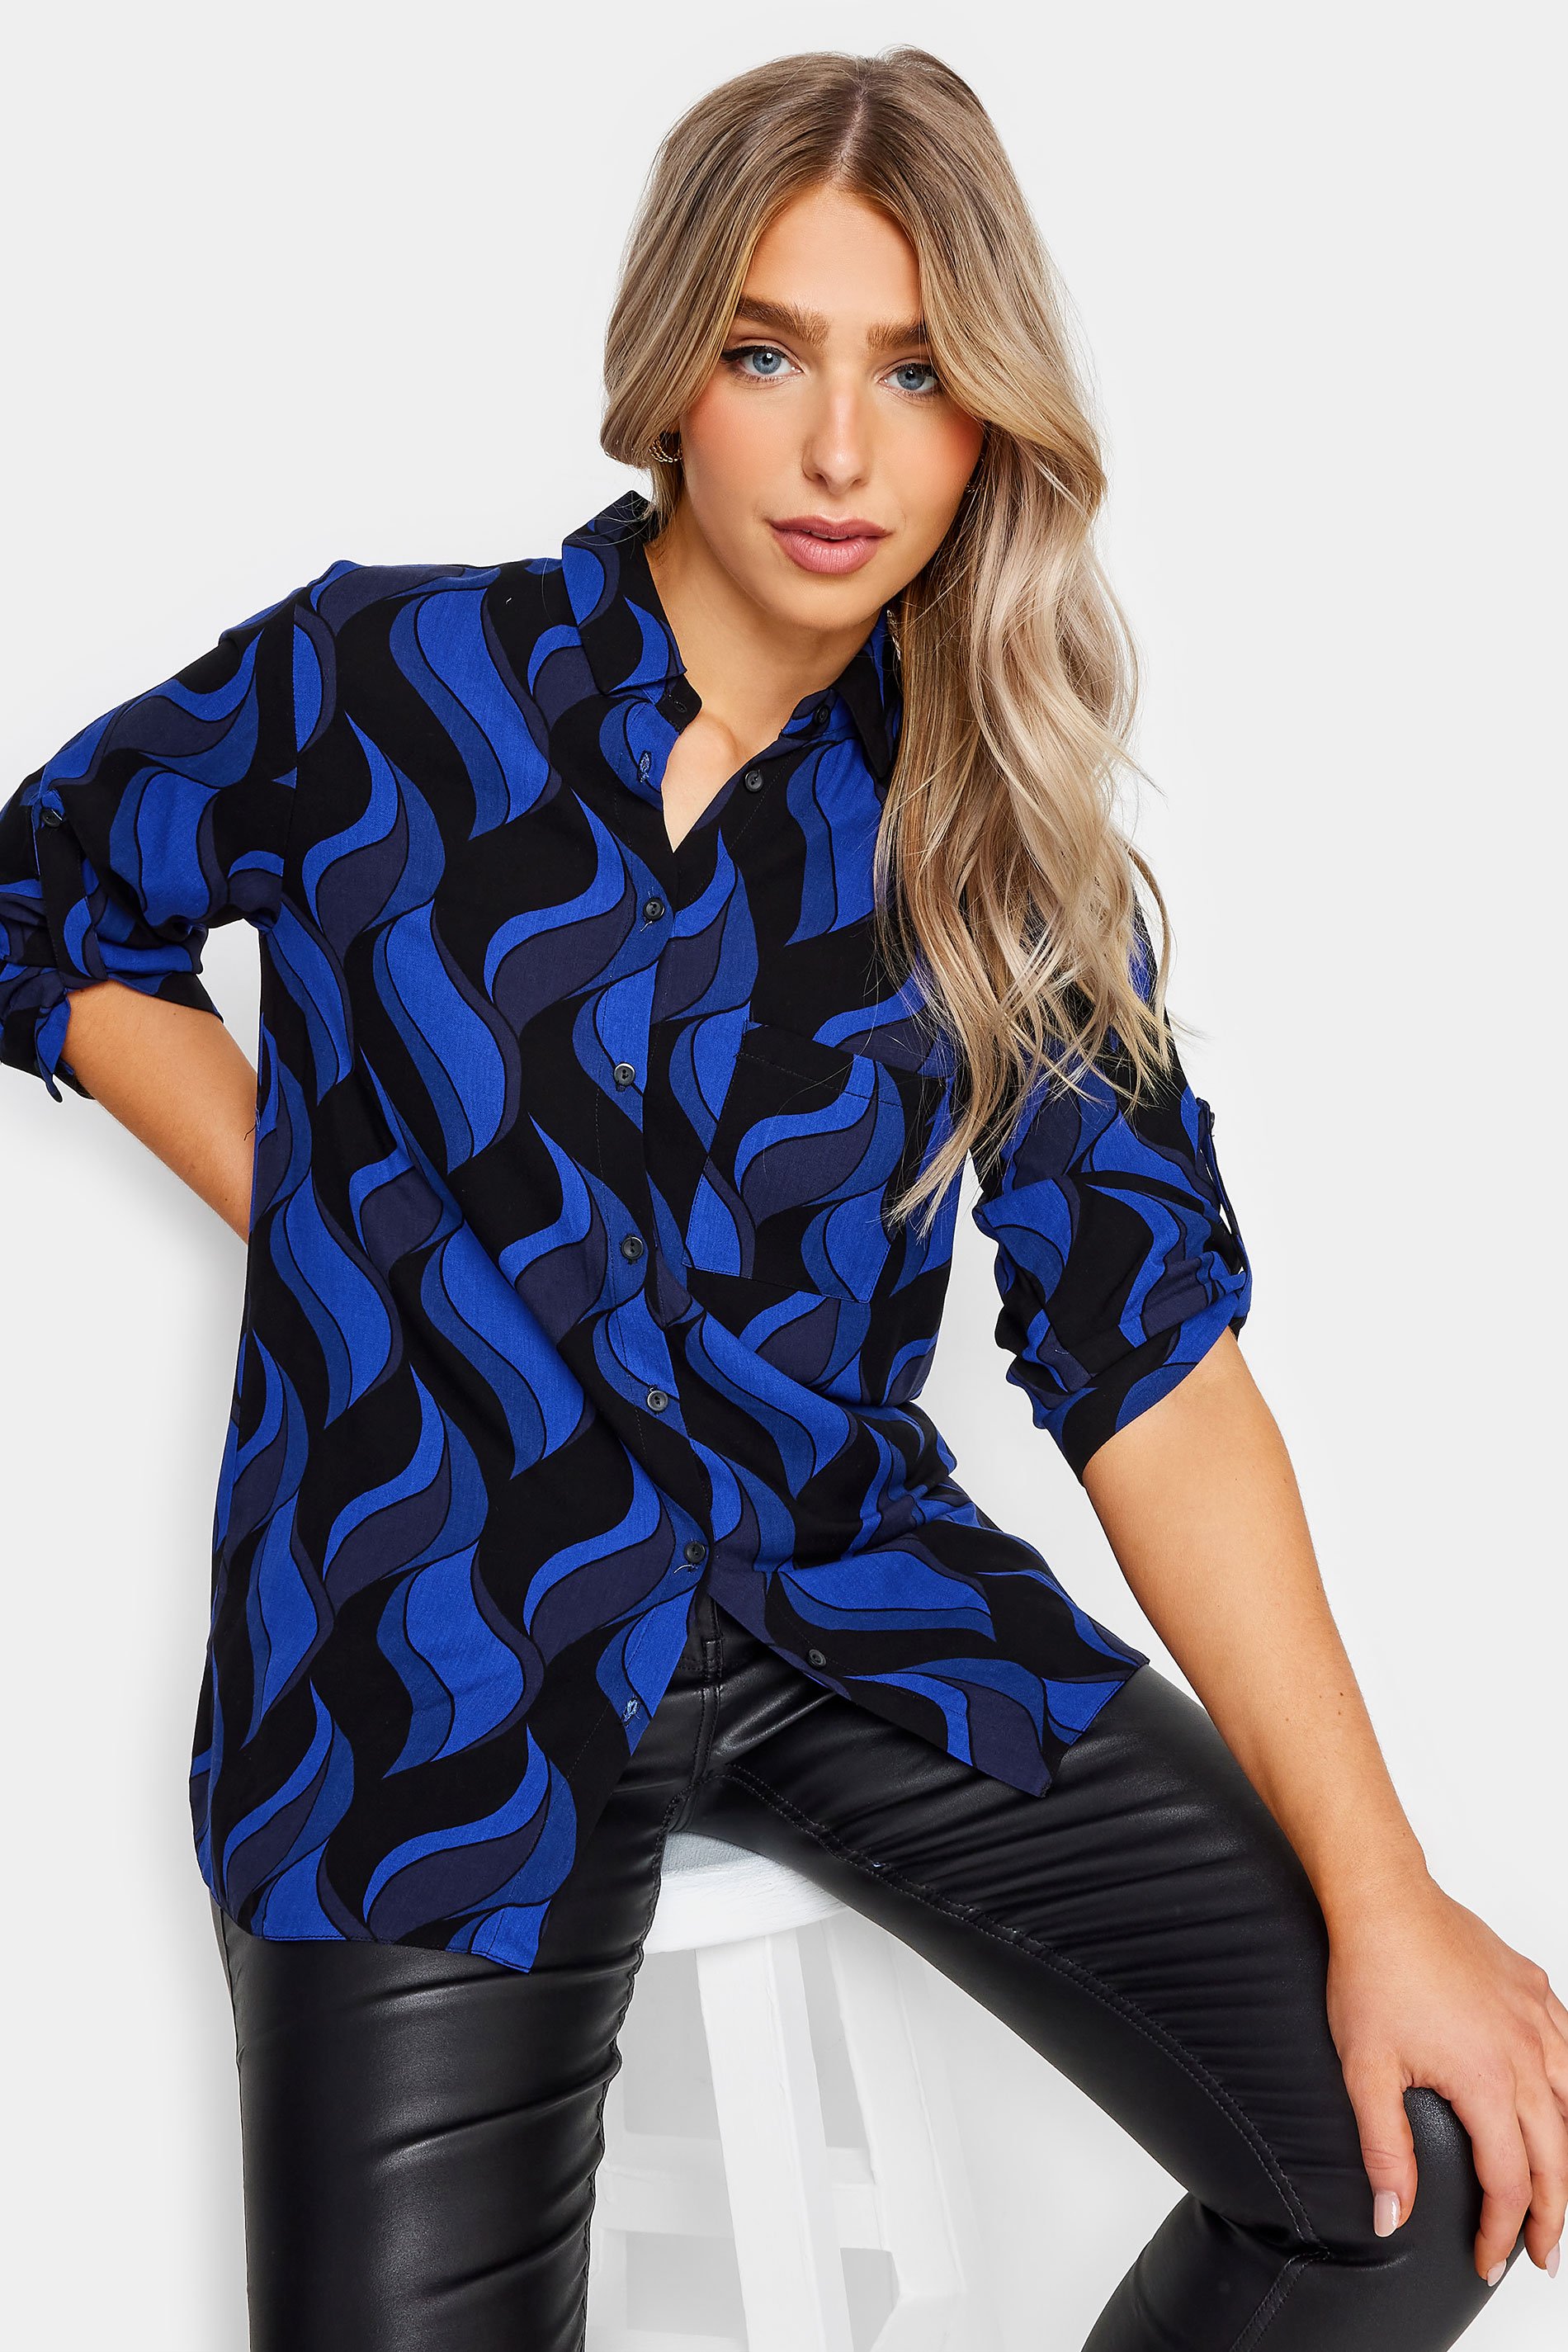 M&Co Black & Blue Swirl Print Tab Sleeve Shirt | M&Co 1